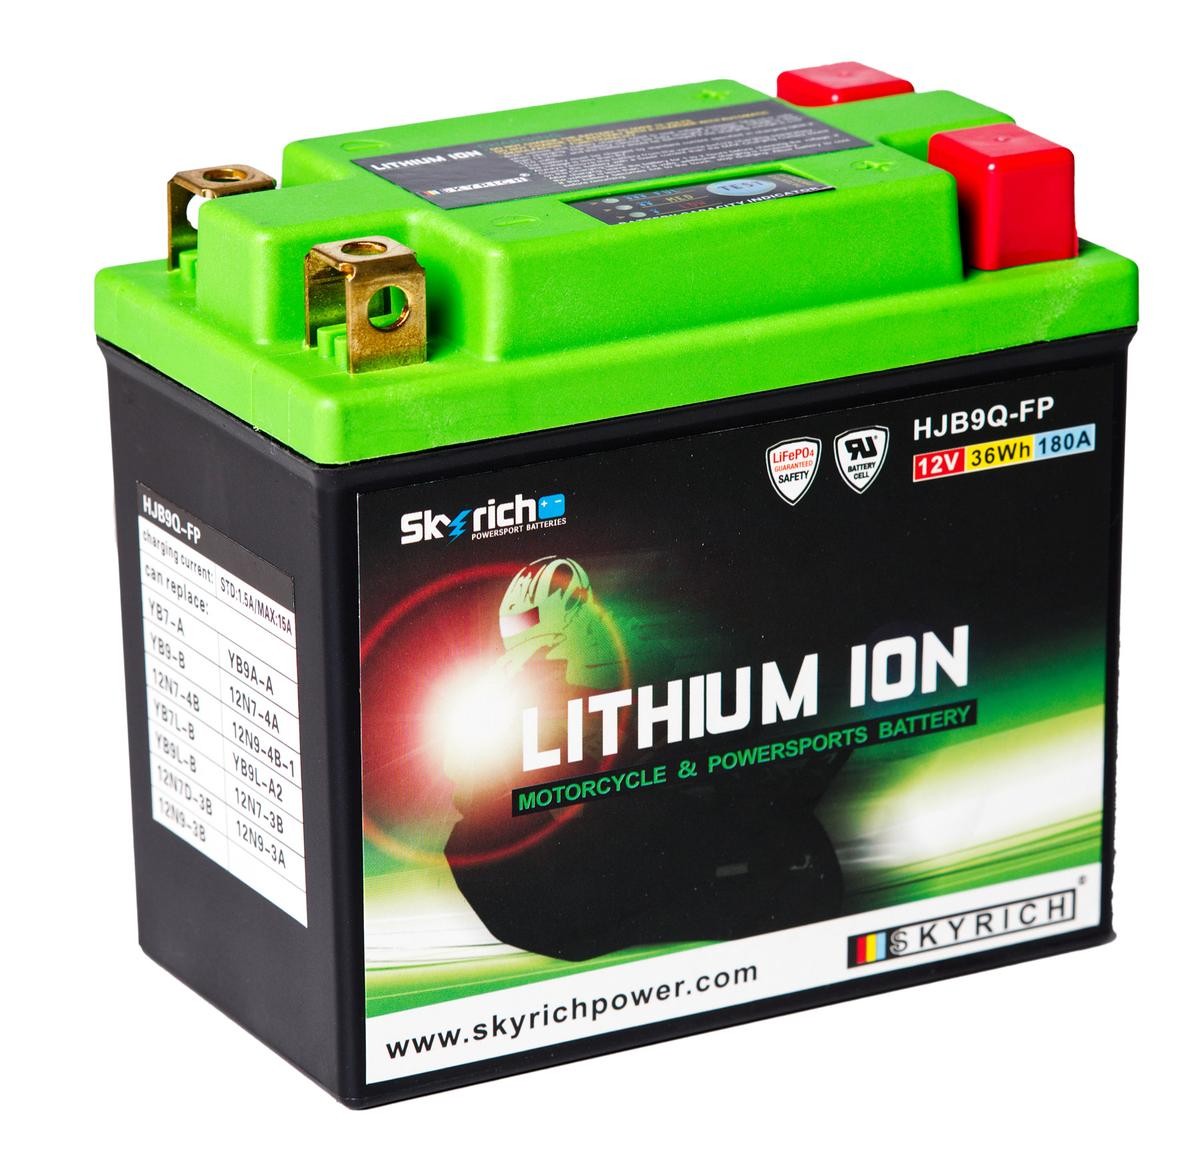 APRILIA RS Batterie 12V 3Ah 180A N Li-Ionen-Batterie SKYRICH LITHIUM ION HJB9Q-FP